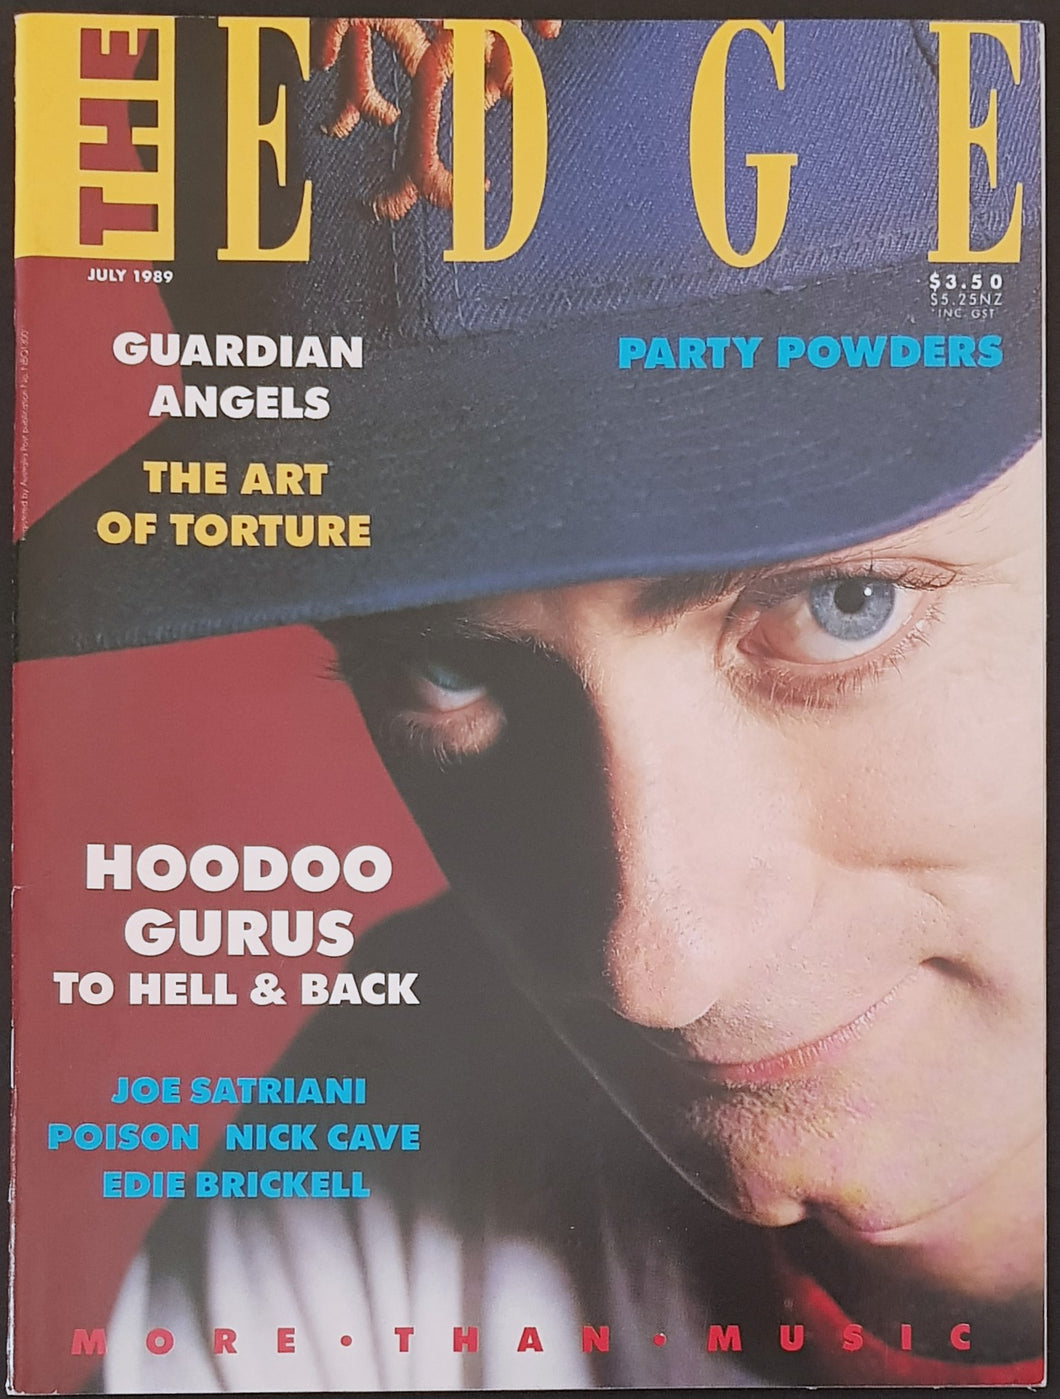 Hoodoo Gurus - The Edge July 1989